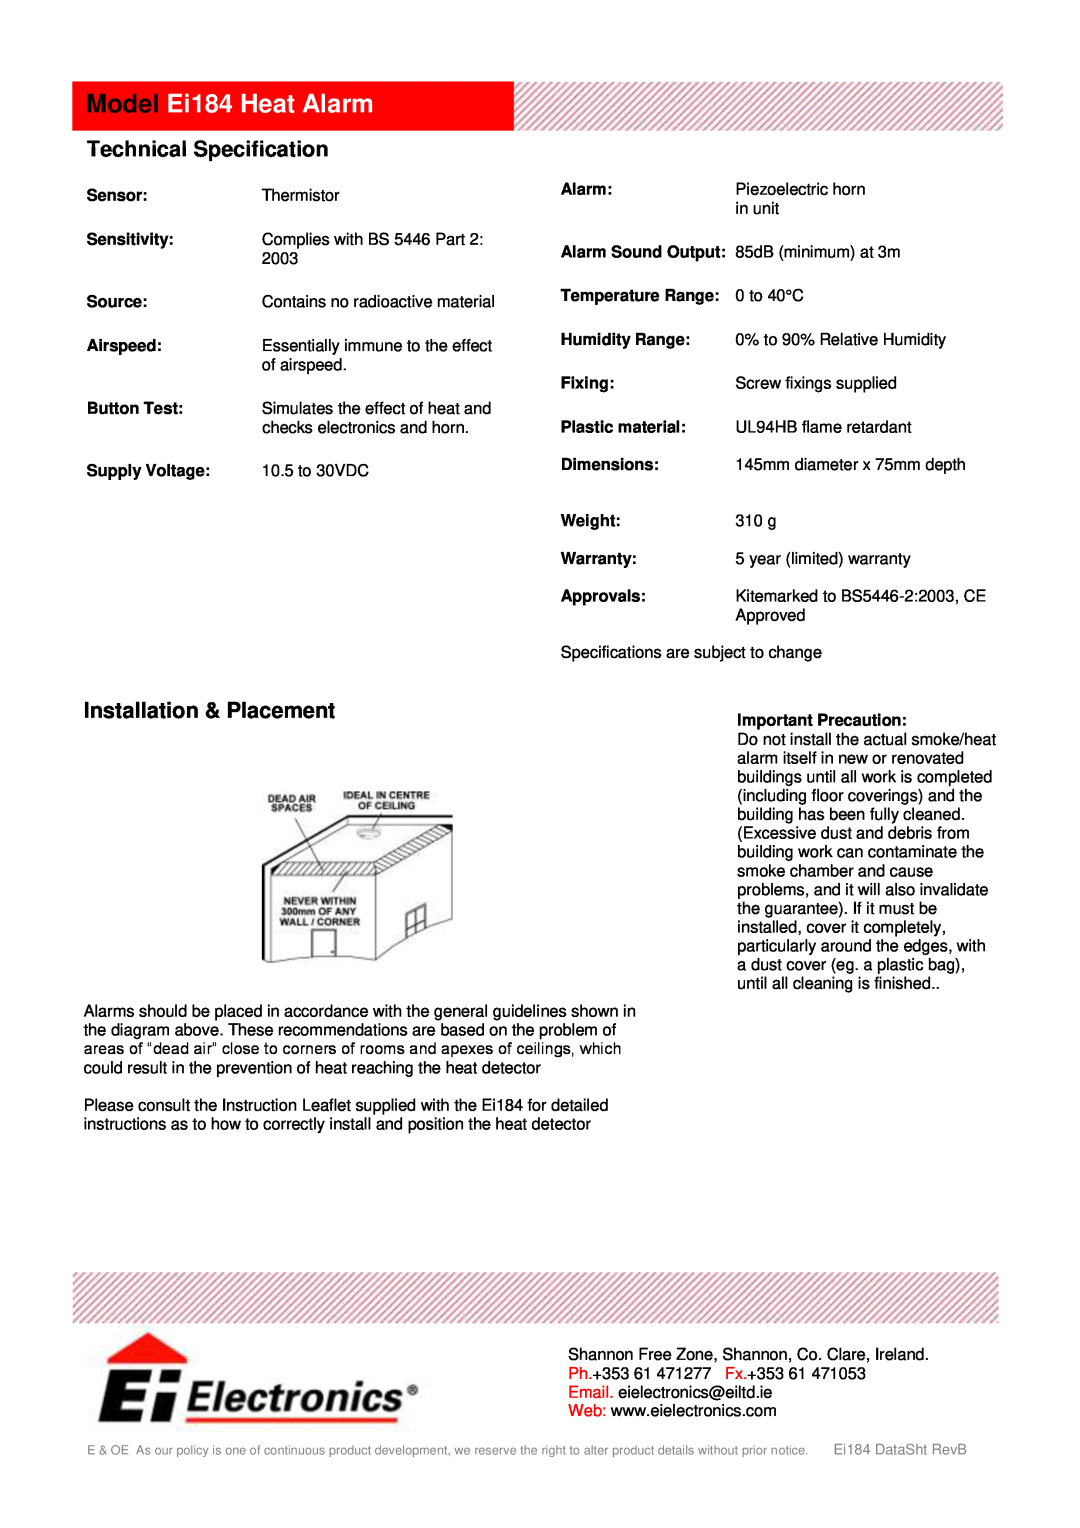 Ei Electronics manual Model Ei184 Heat Alarm, Technical Specification, Installation & Placement 